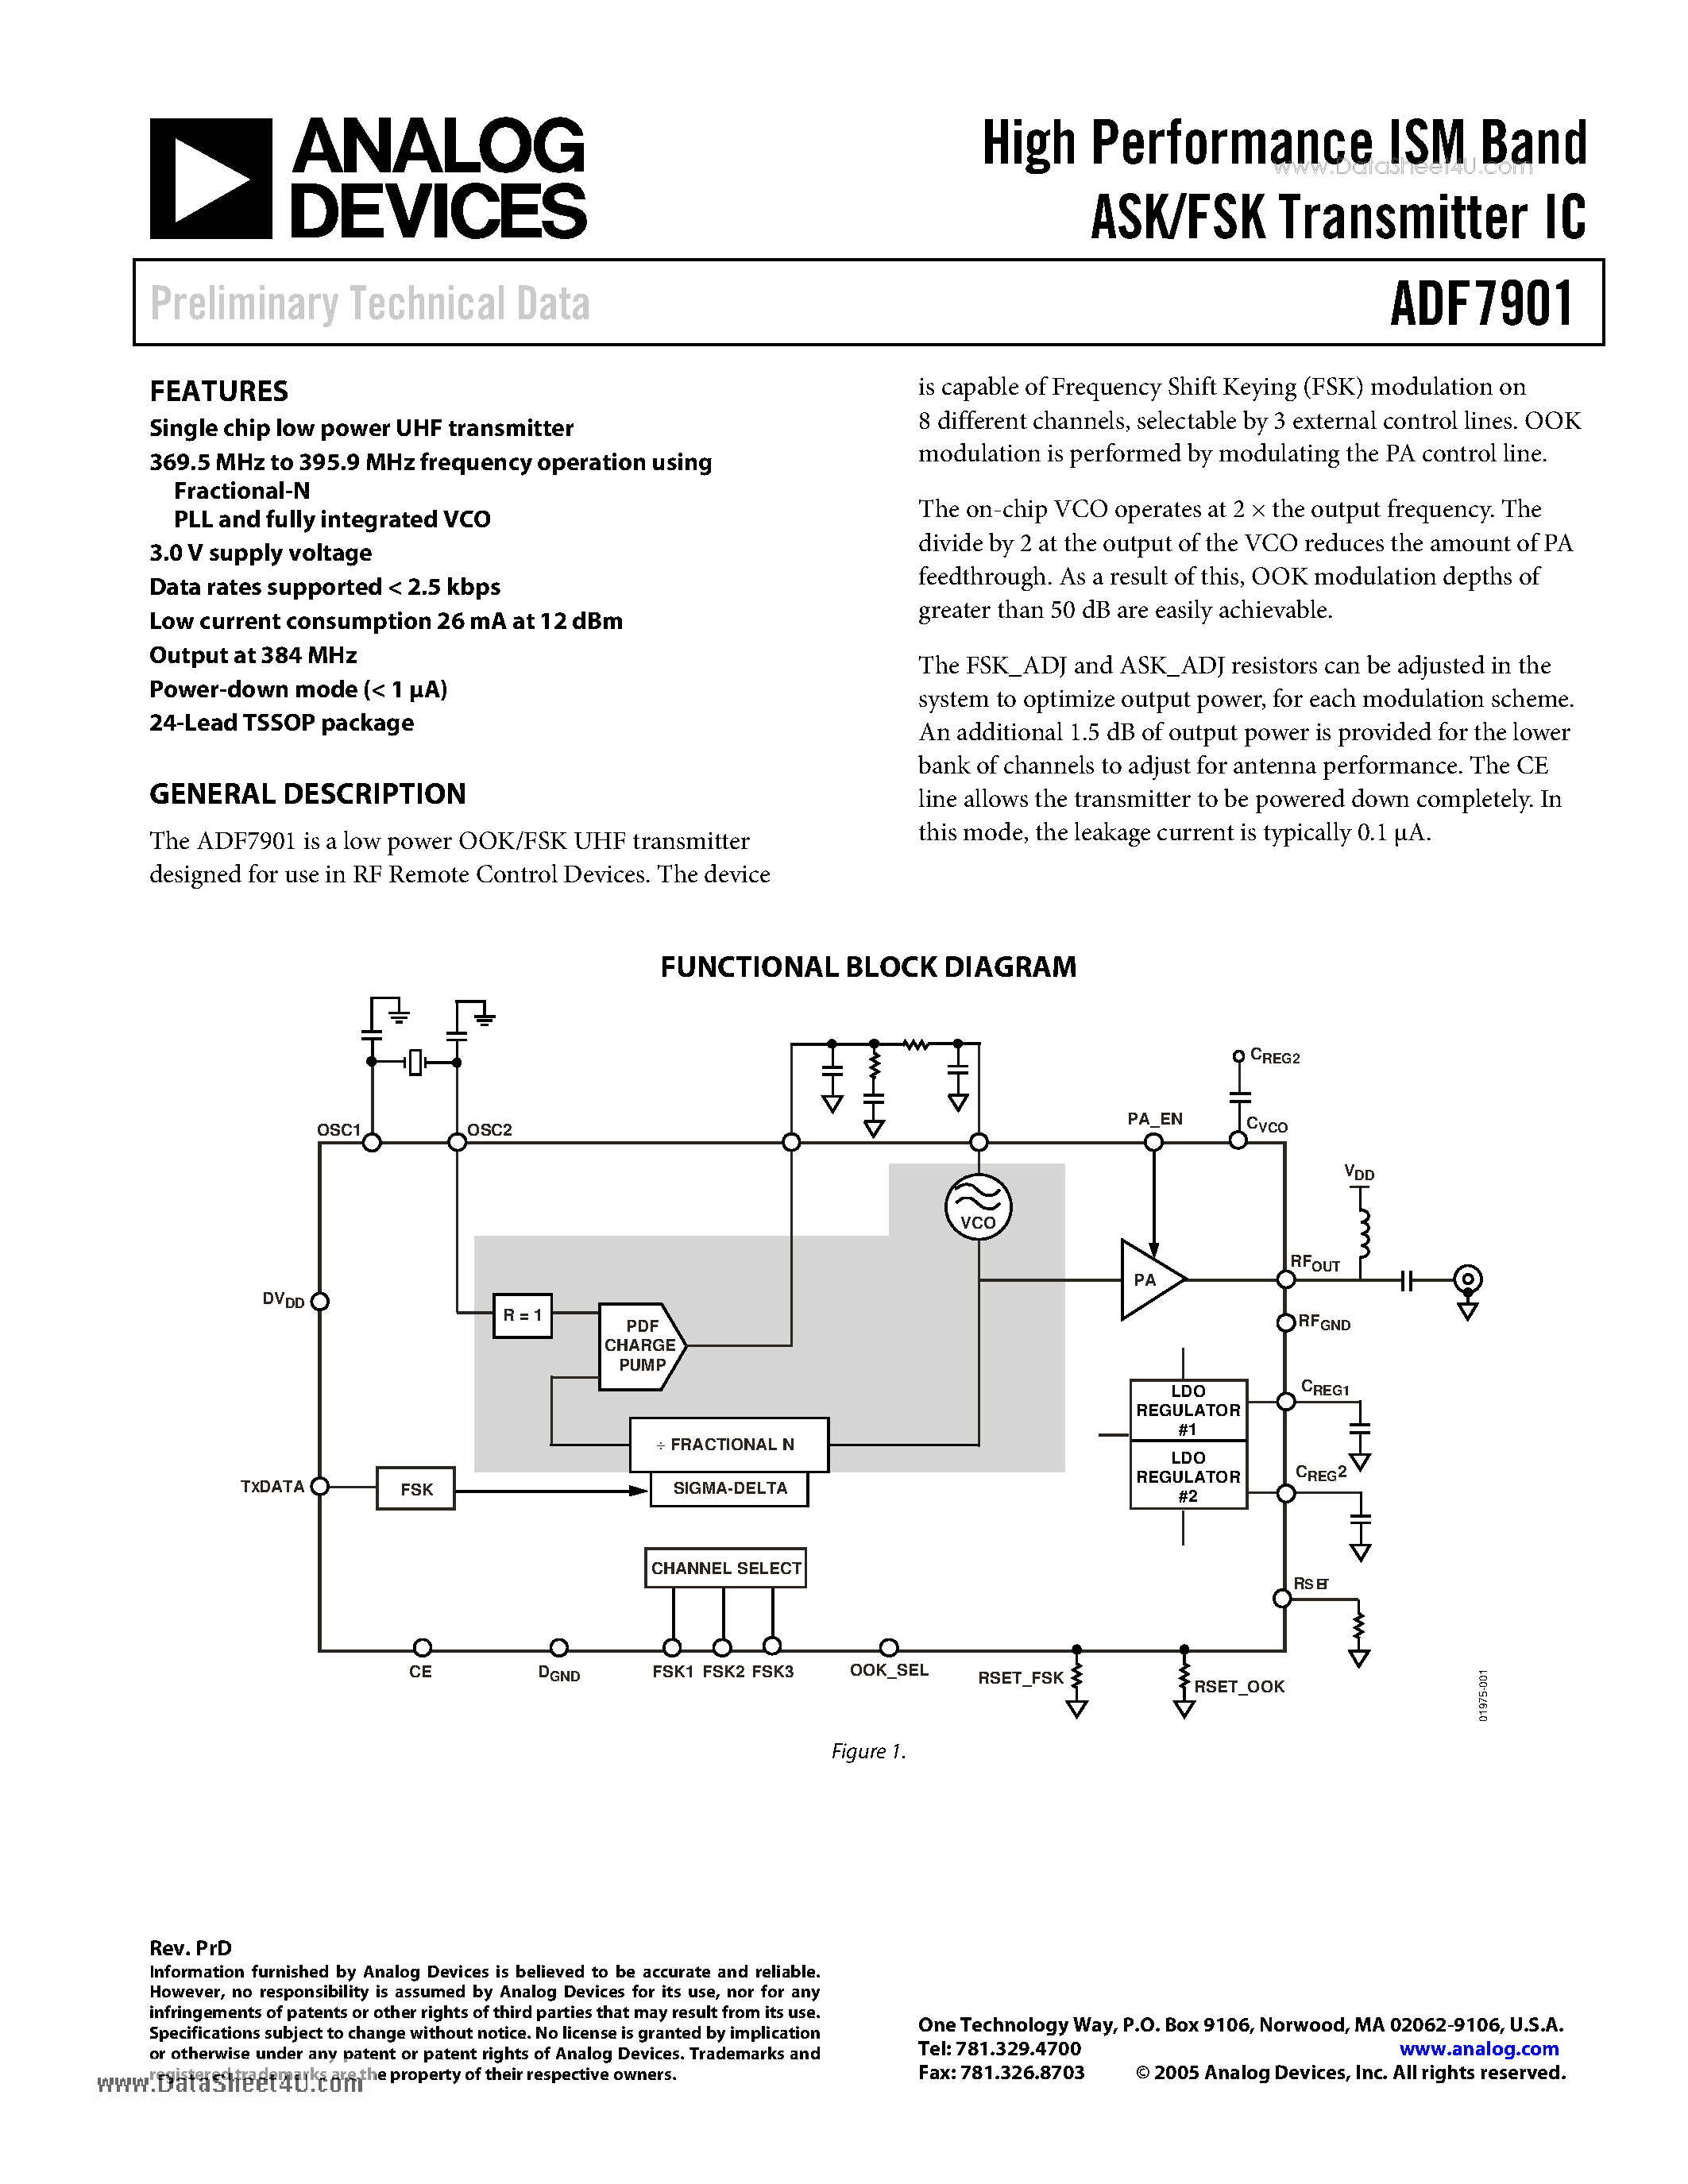 Даташит ADF7901 - High Performance ISM Band ASK/FSK Transmitter IC страница 1